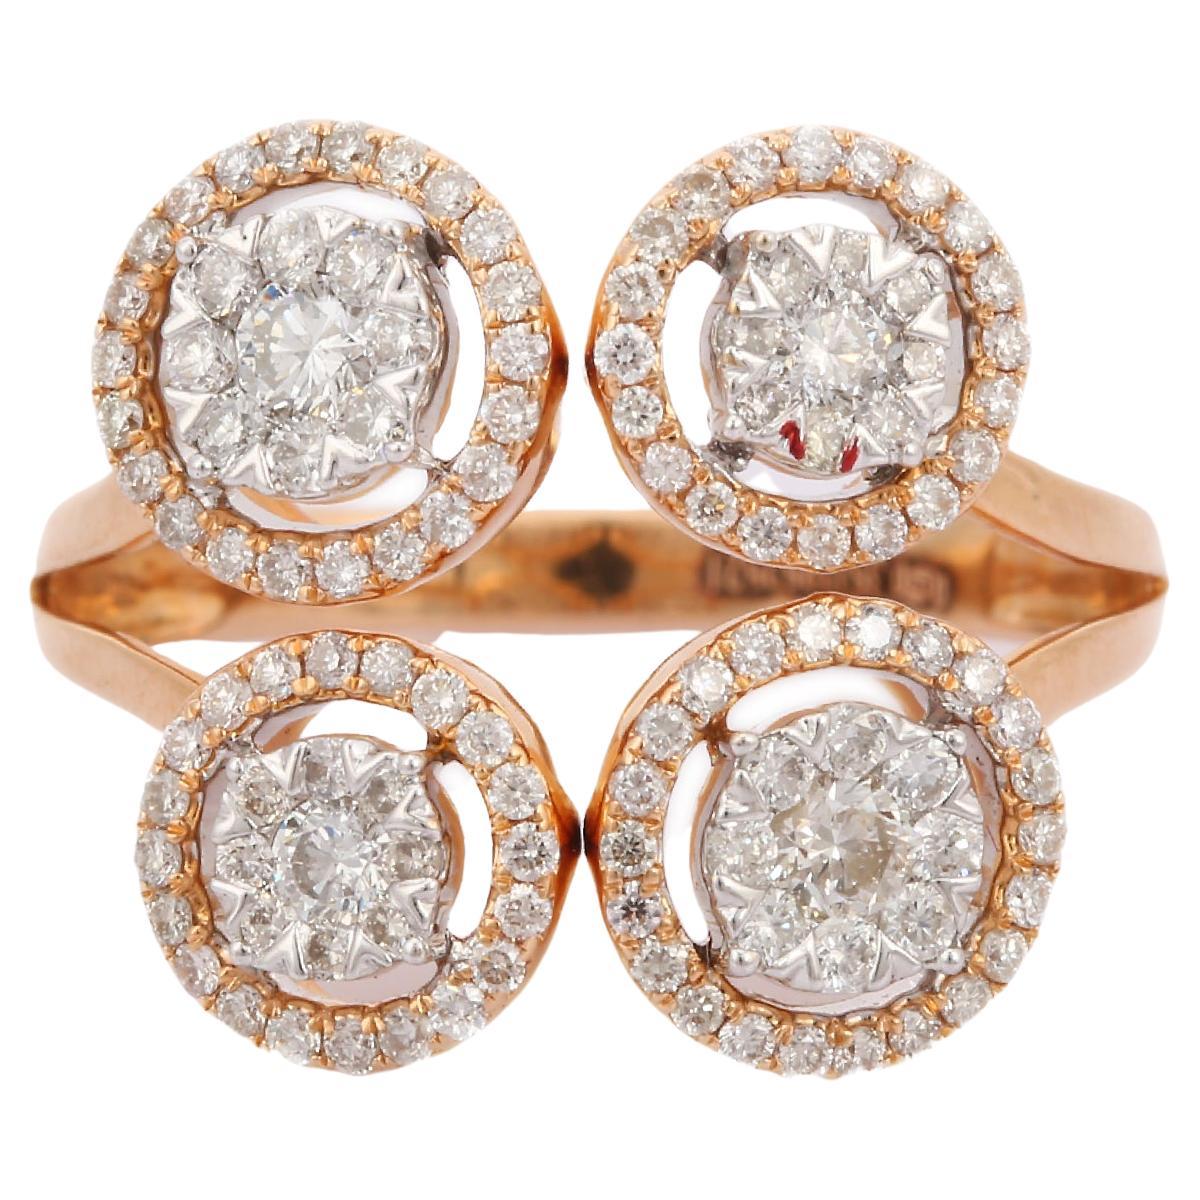 Statement Illusion Diamant-Hochzeits-Cluster-Ring aus 18 Karat massivem Roségold